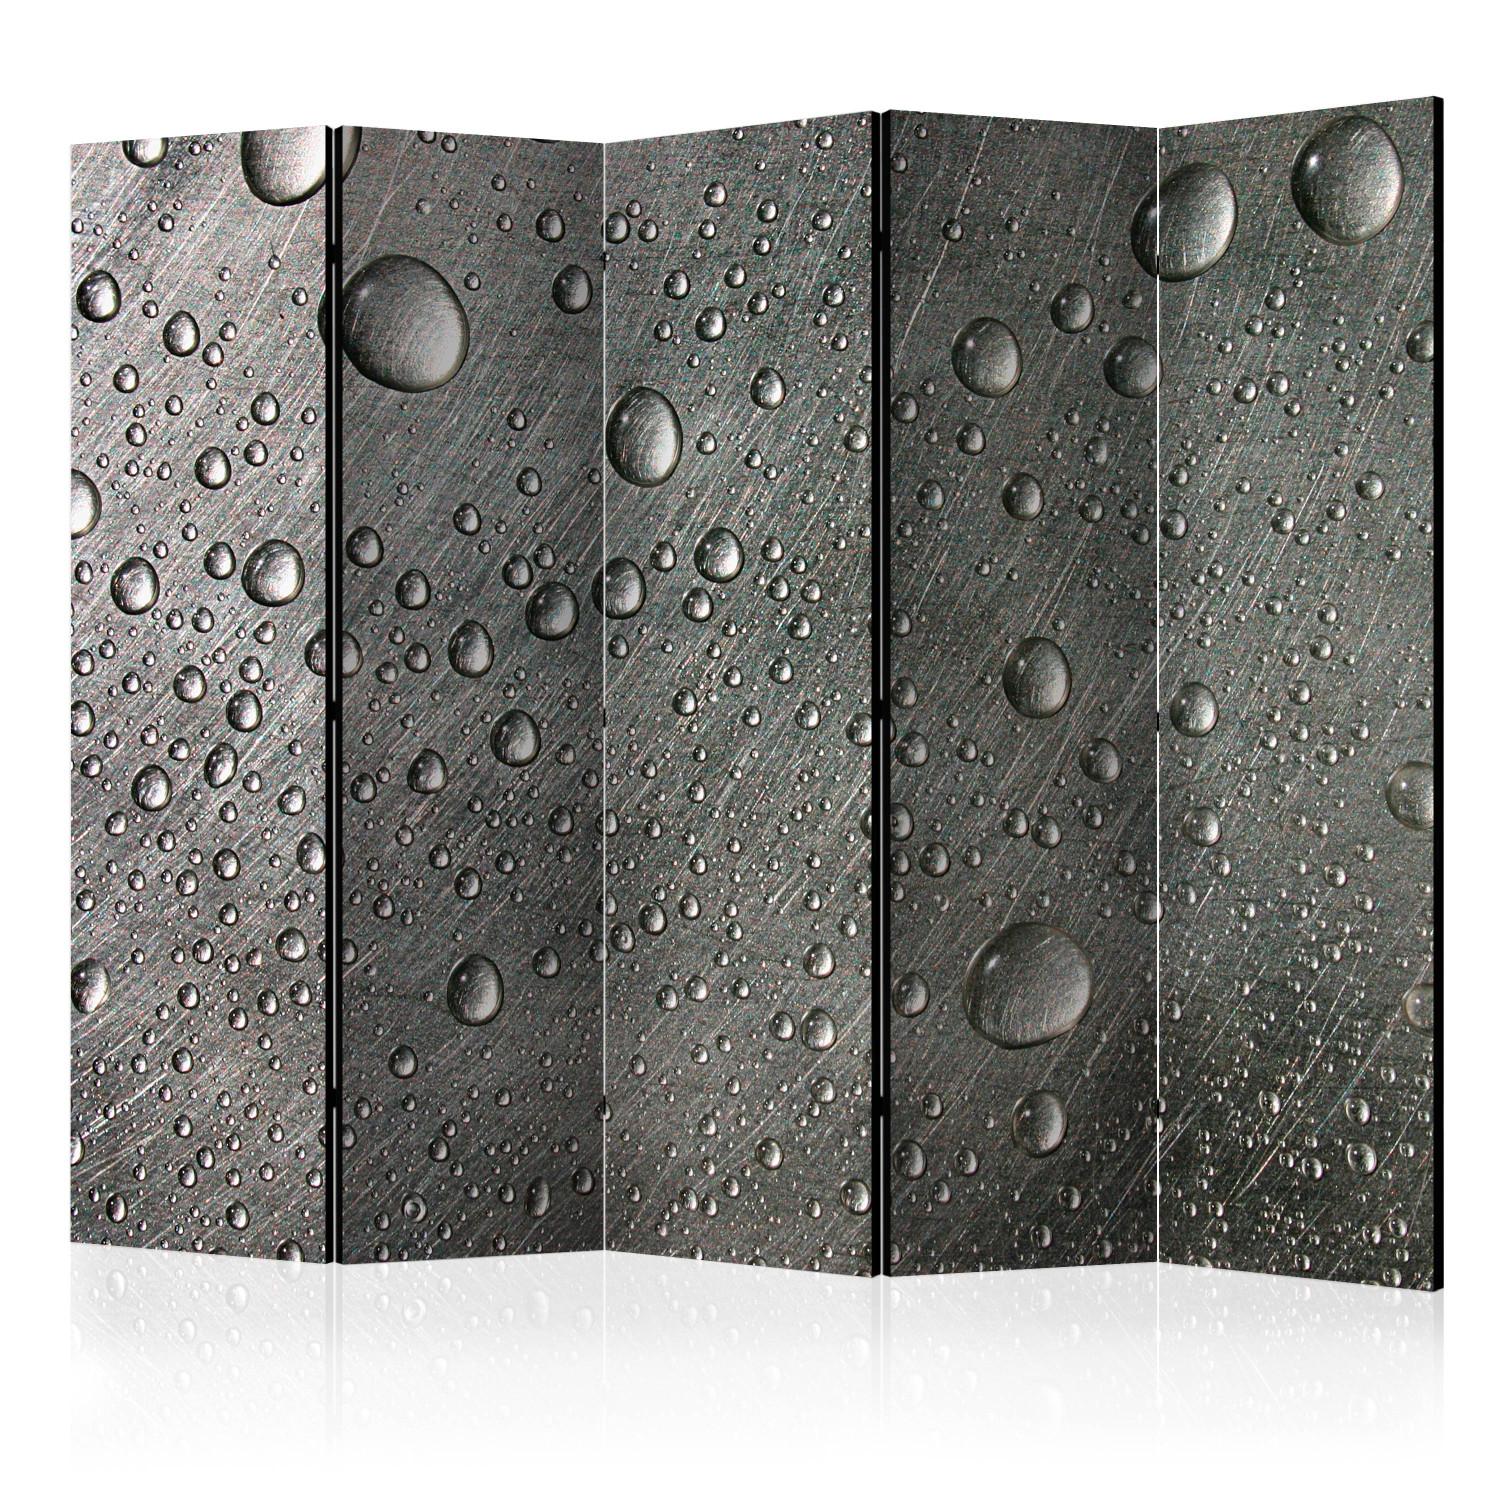 Biombo Superficie de acero con gotas de agua II (5 piezas) - modelo gris